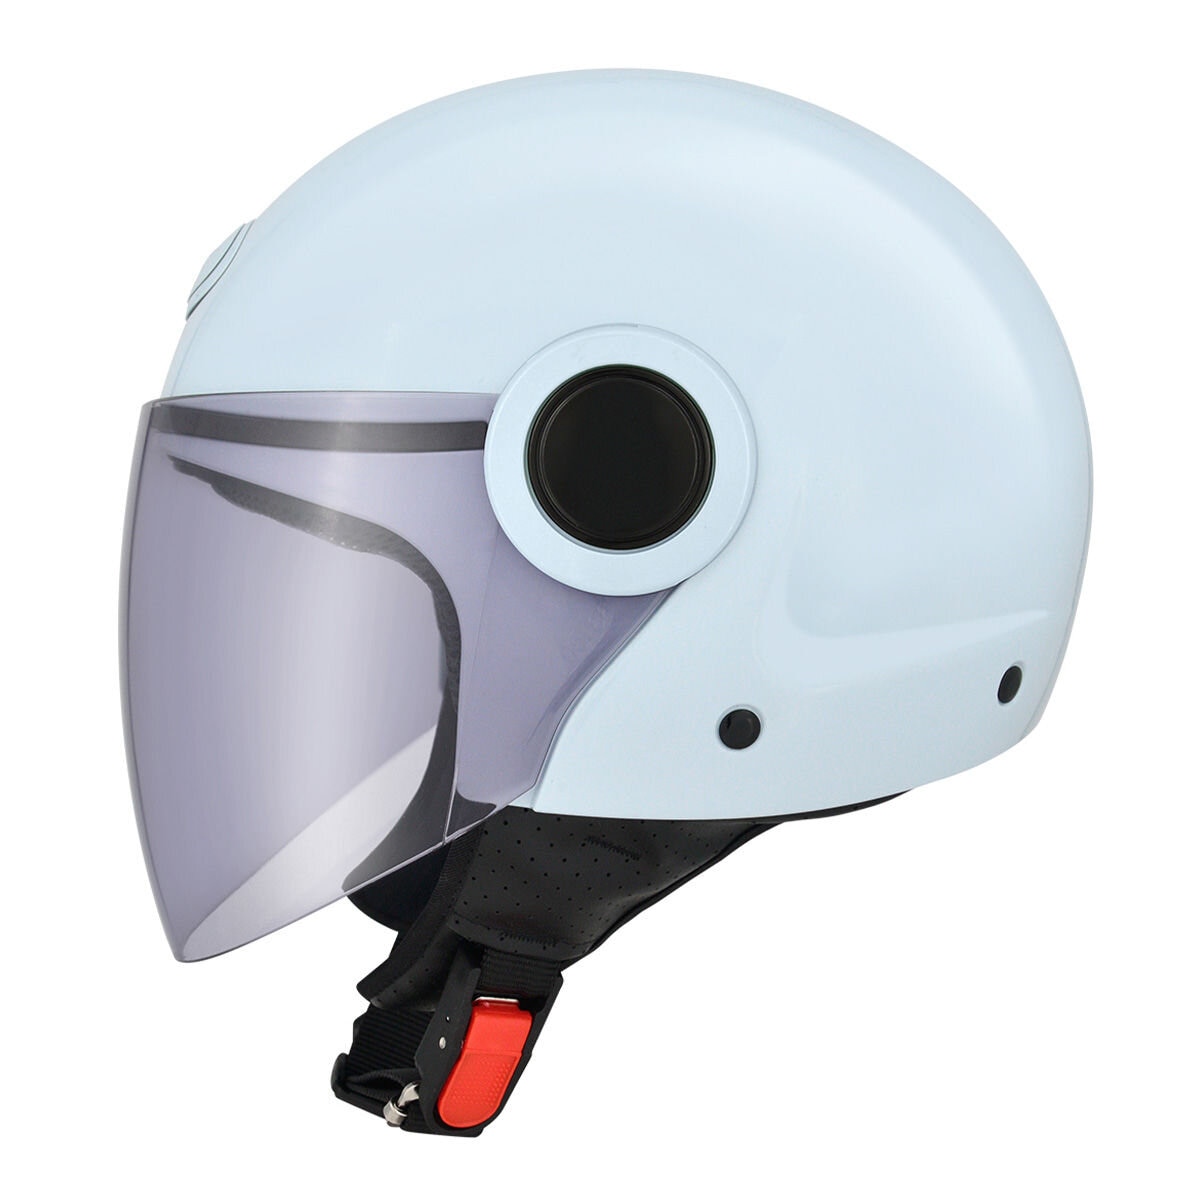 M2R 1/2罩安全帽 騎乘機車用防護頭盔 M-506 亮藍 S